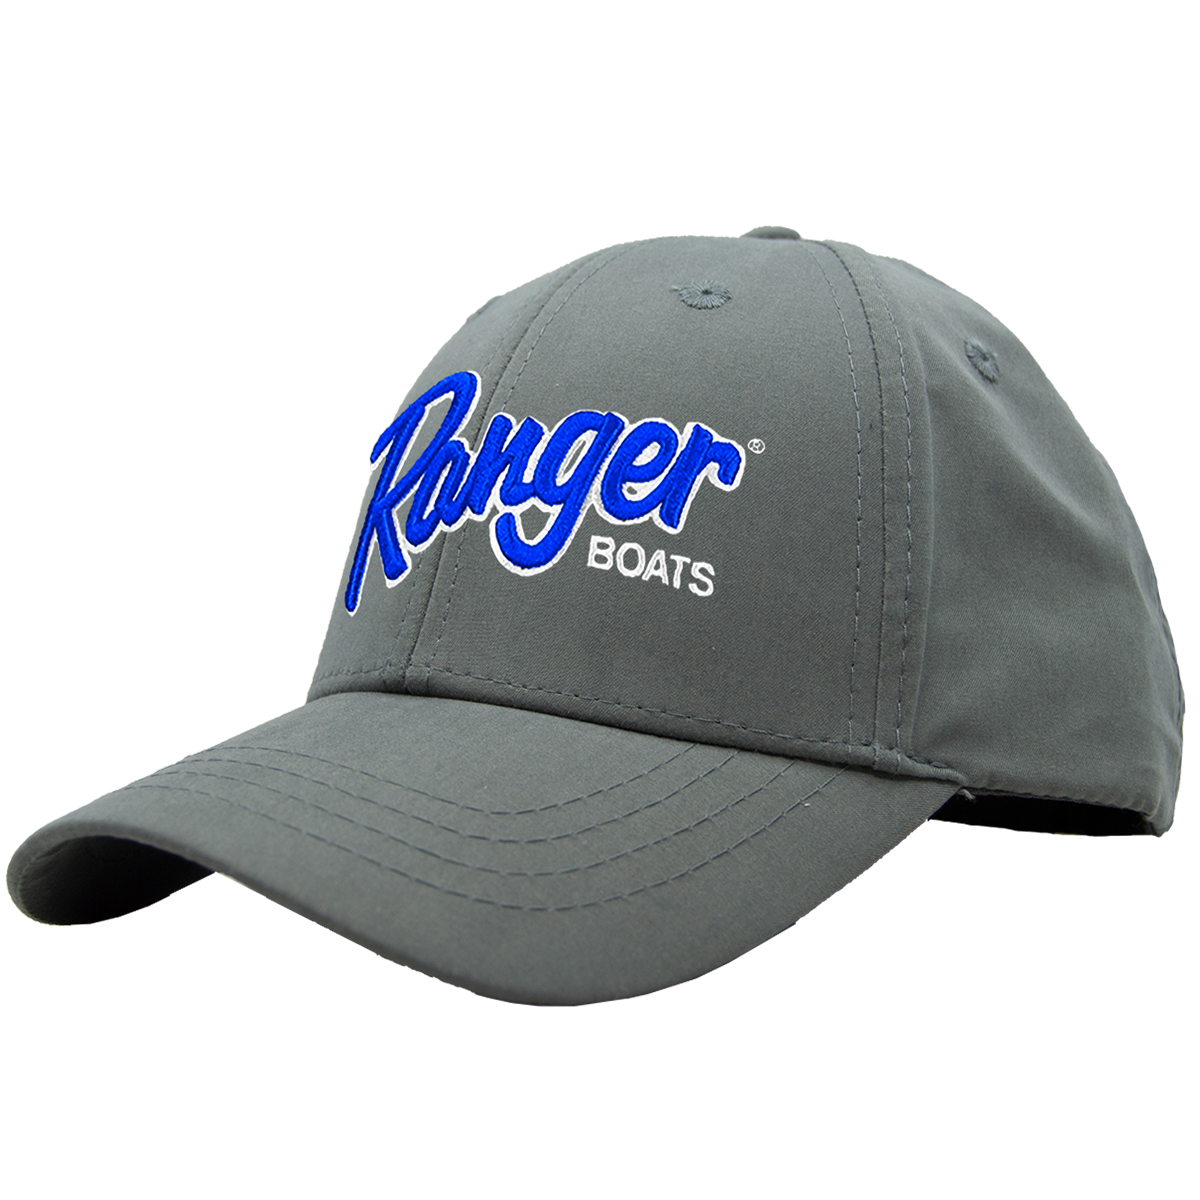 Accessories RangerBoatsGear - & Hats